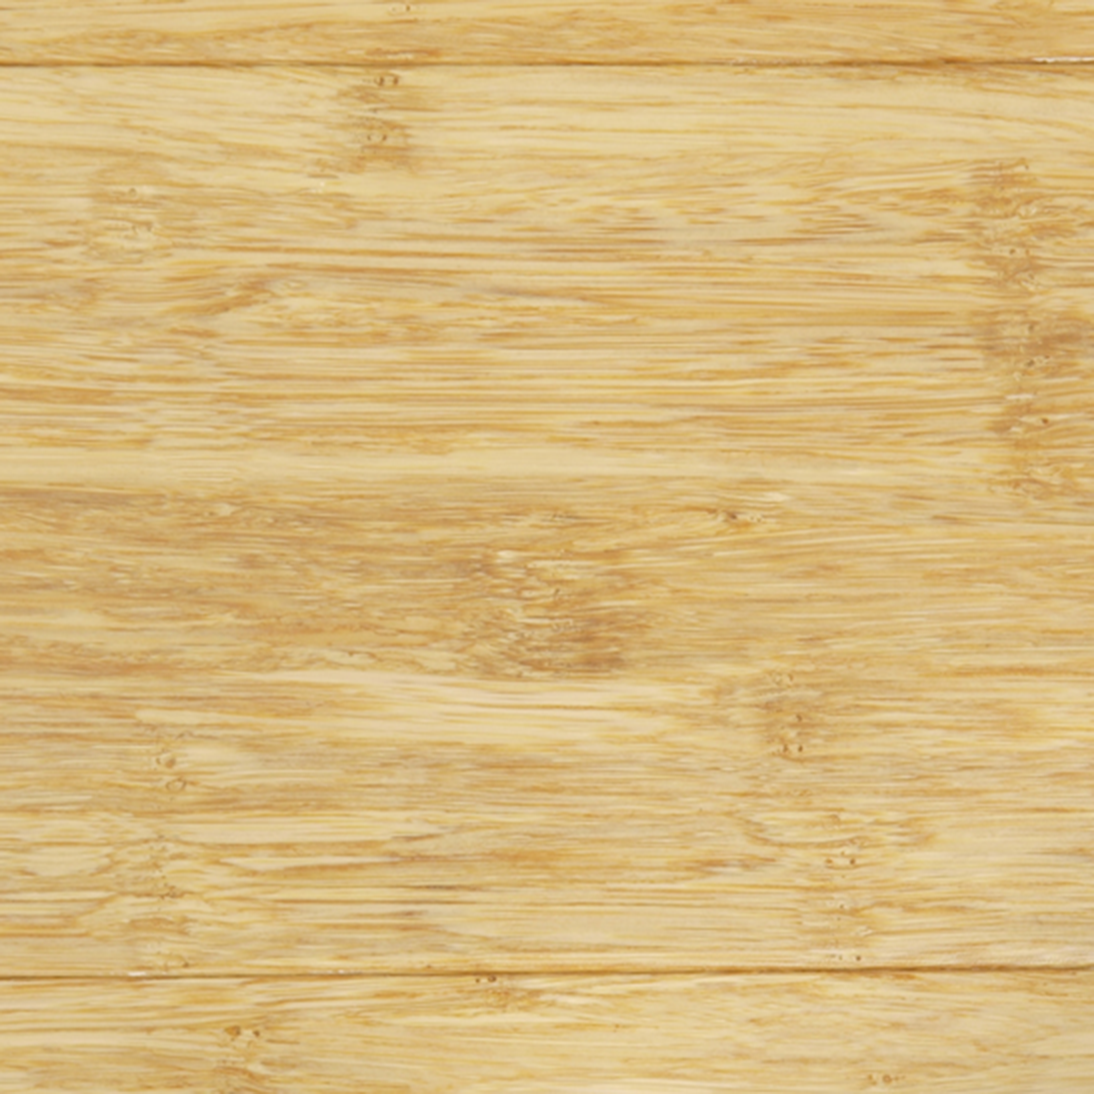 VERDEE Strand Woven Bamboo Flooring - Nature Series (Natural) [$58/sqft; 20.6sqft/box]